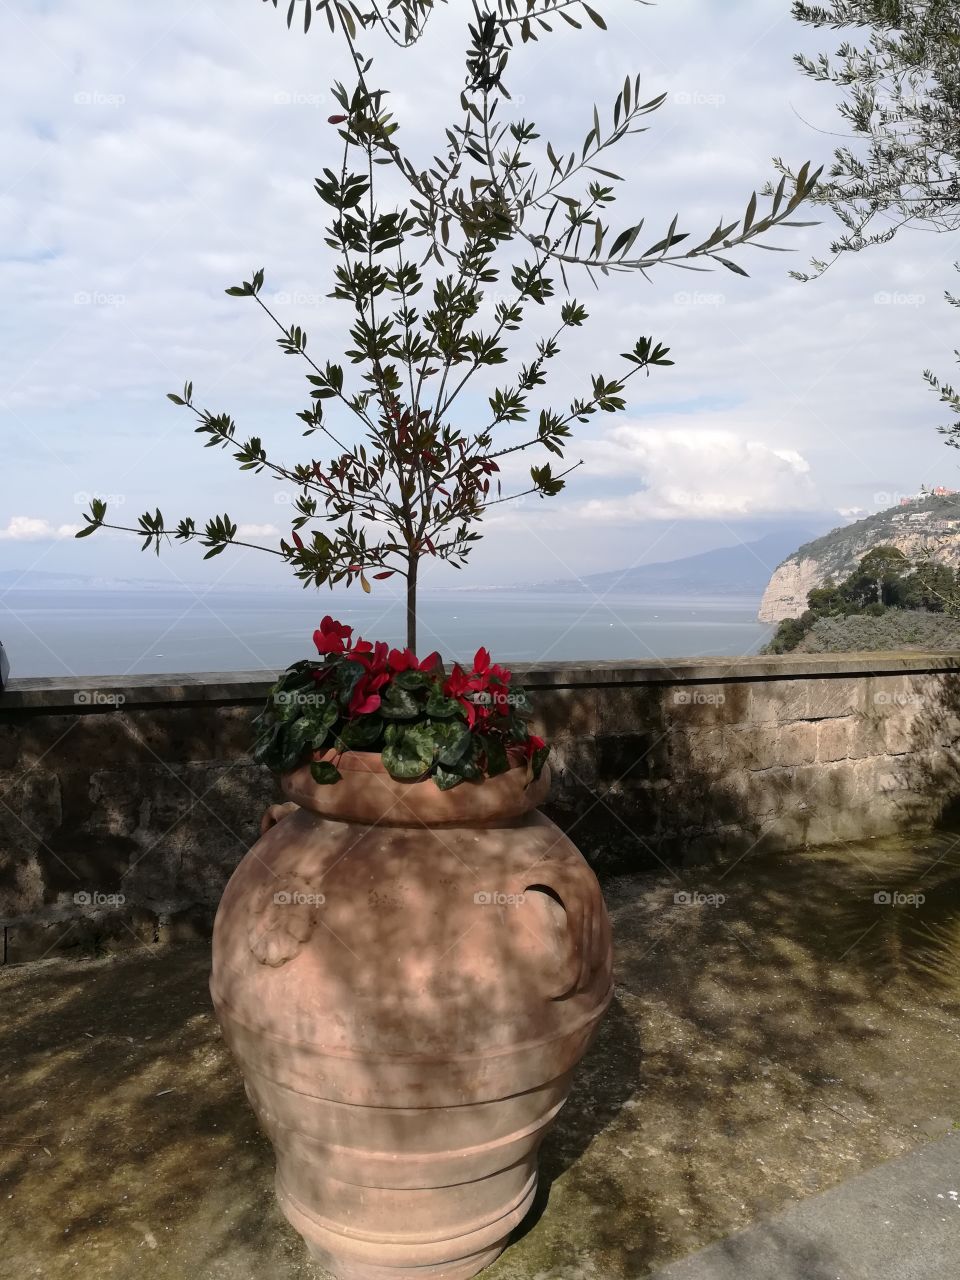 Vesuvio on the horizon